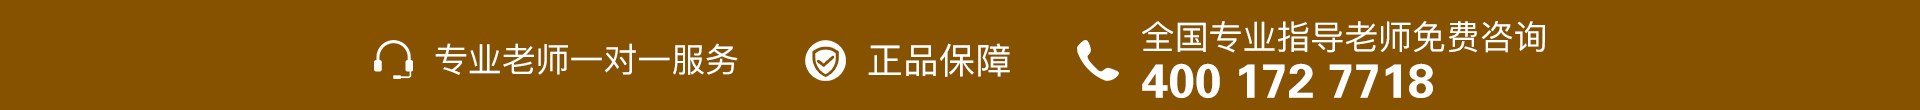 深黄色电话-banner图下方-PC - 副本 (5).jpg